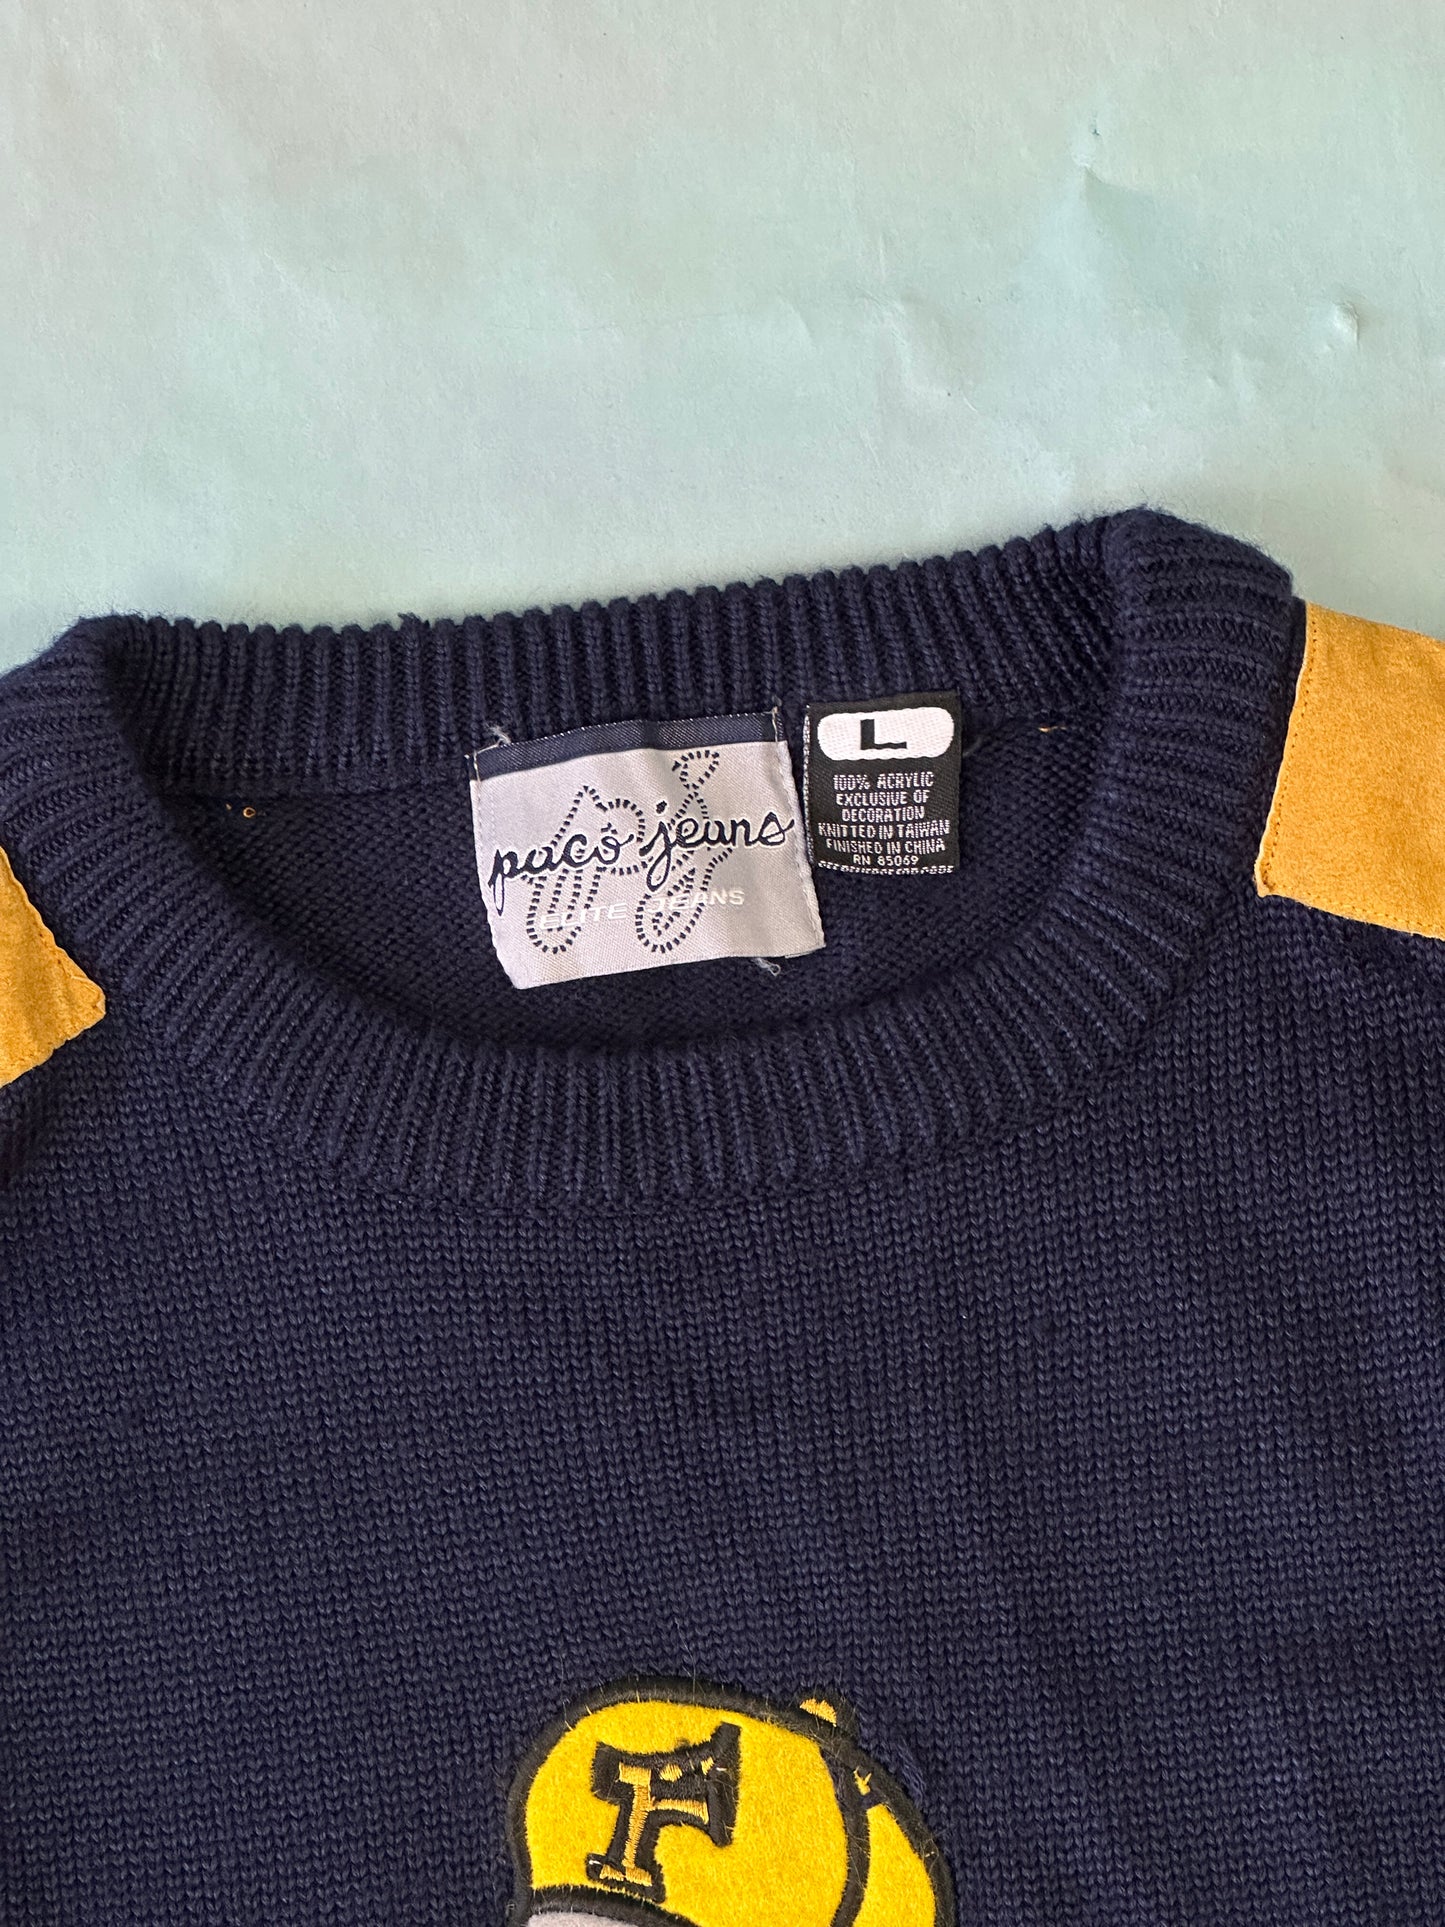 Paco Jeans Vintage Sweater - L